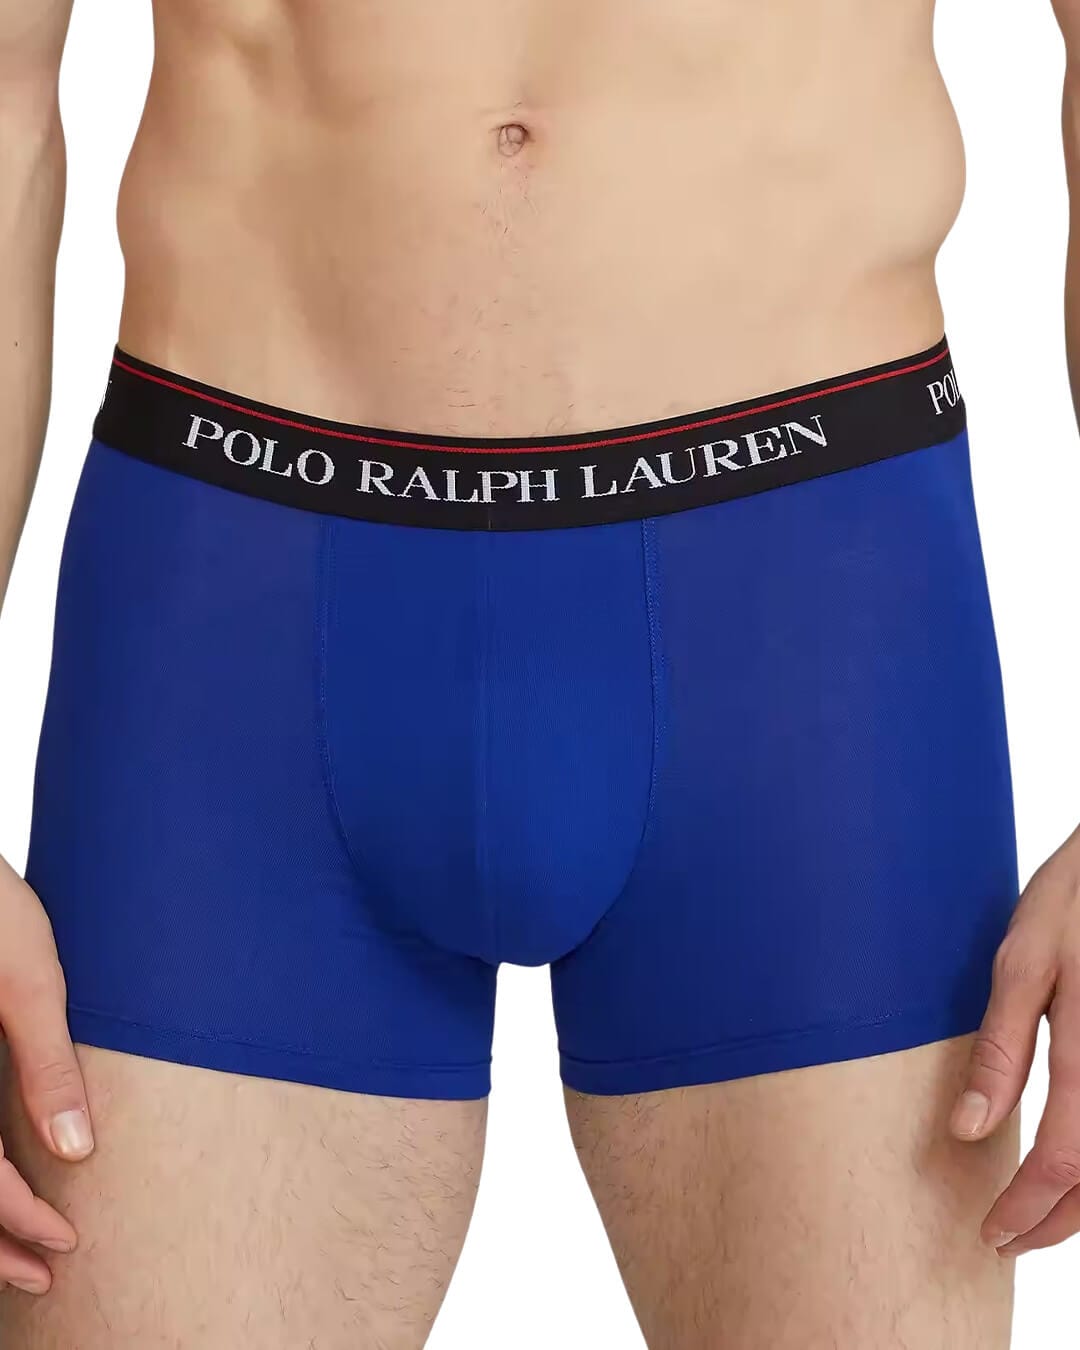 Polo Ralph Lauren Underwear Polo Ralph Lauren Blue, Gold And Black Three-Pack Trunks